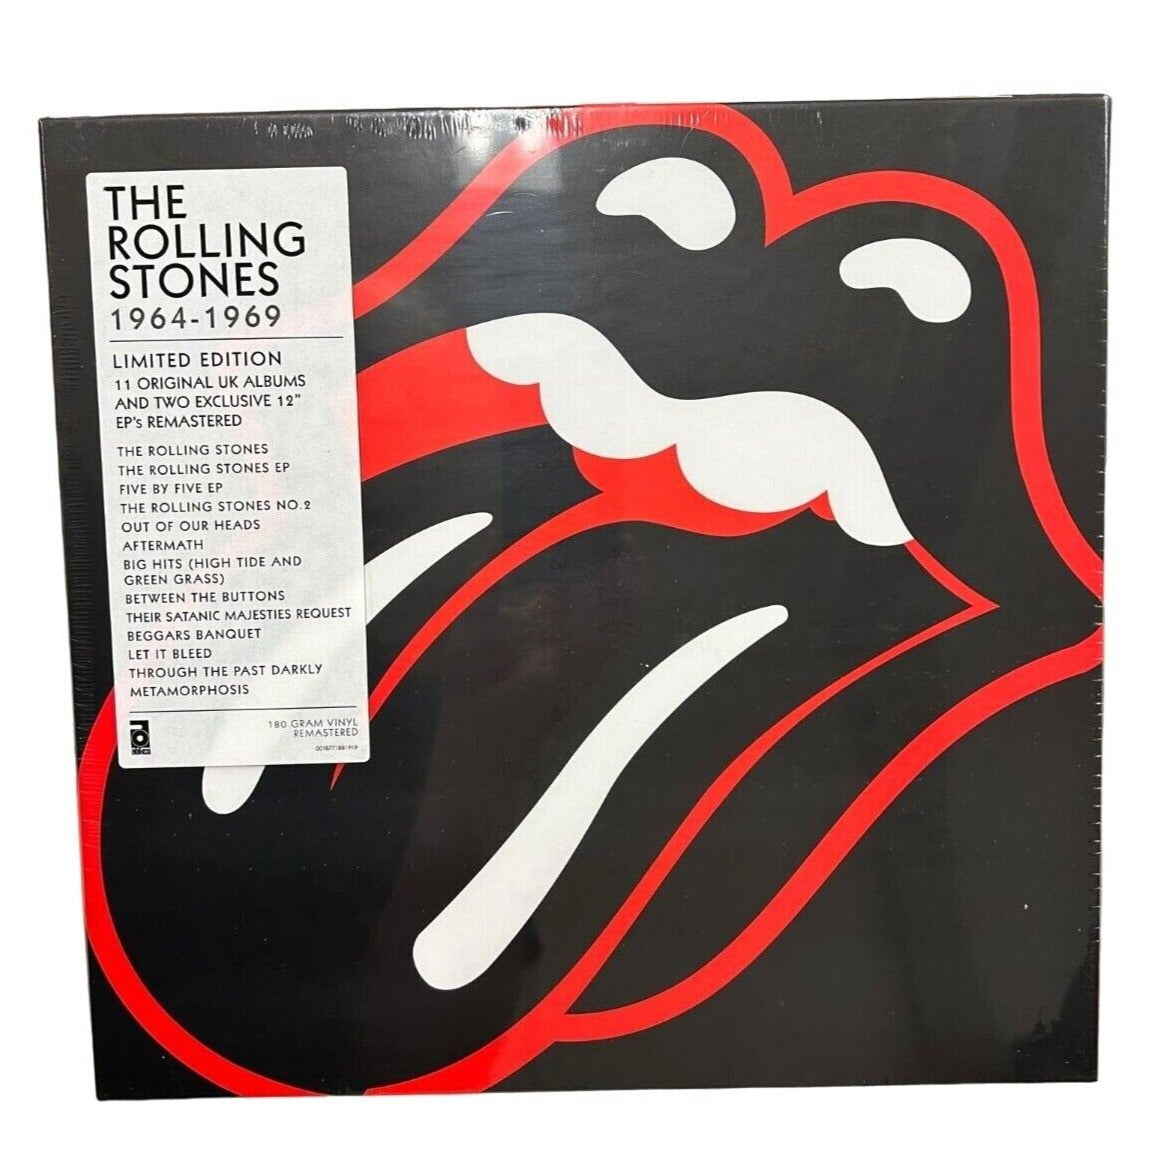 The Rolling Stones 1964-1969 - Sealed 2010 UK Vinyl Limited Ed. Numbered Box Set